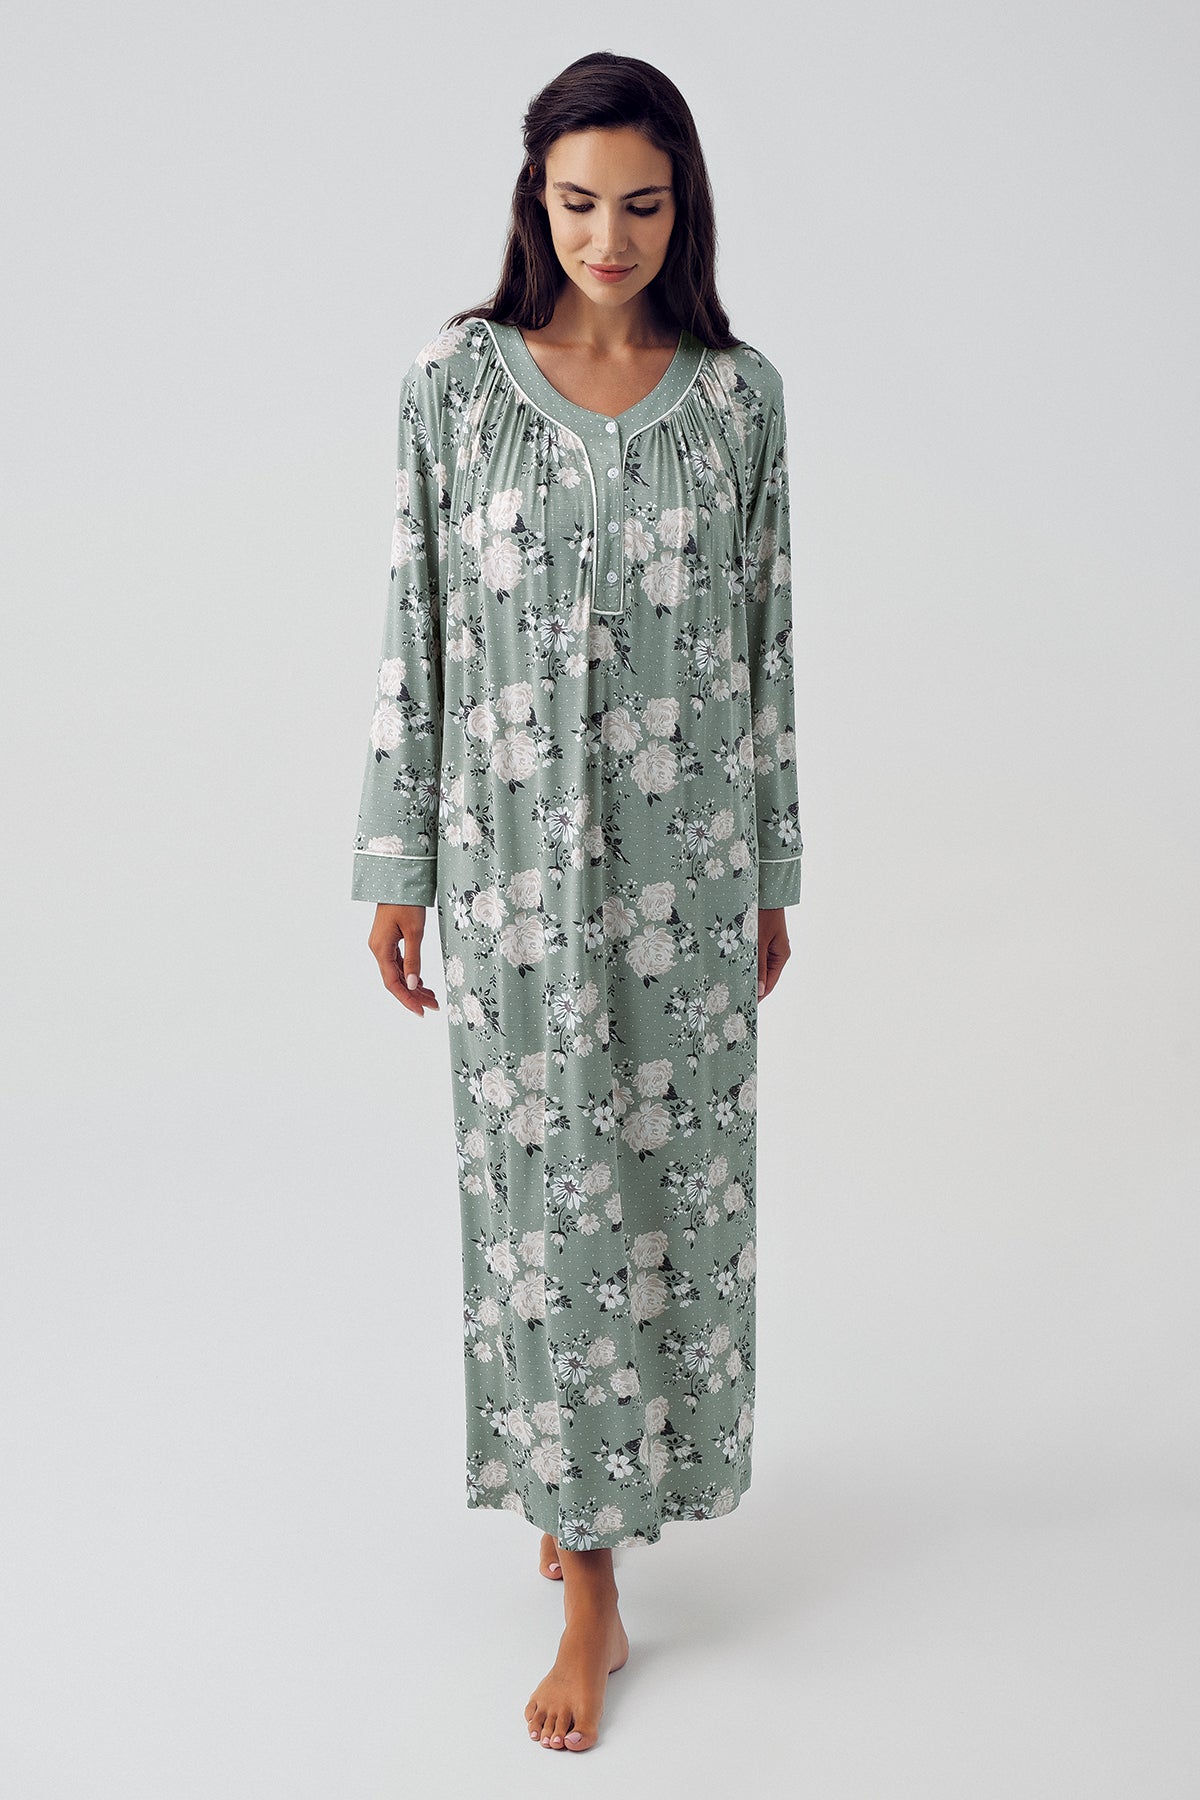 Shopymommy 15115 Flowery Plus Size Maternity & Nursing Nightgown Green